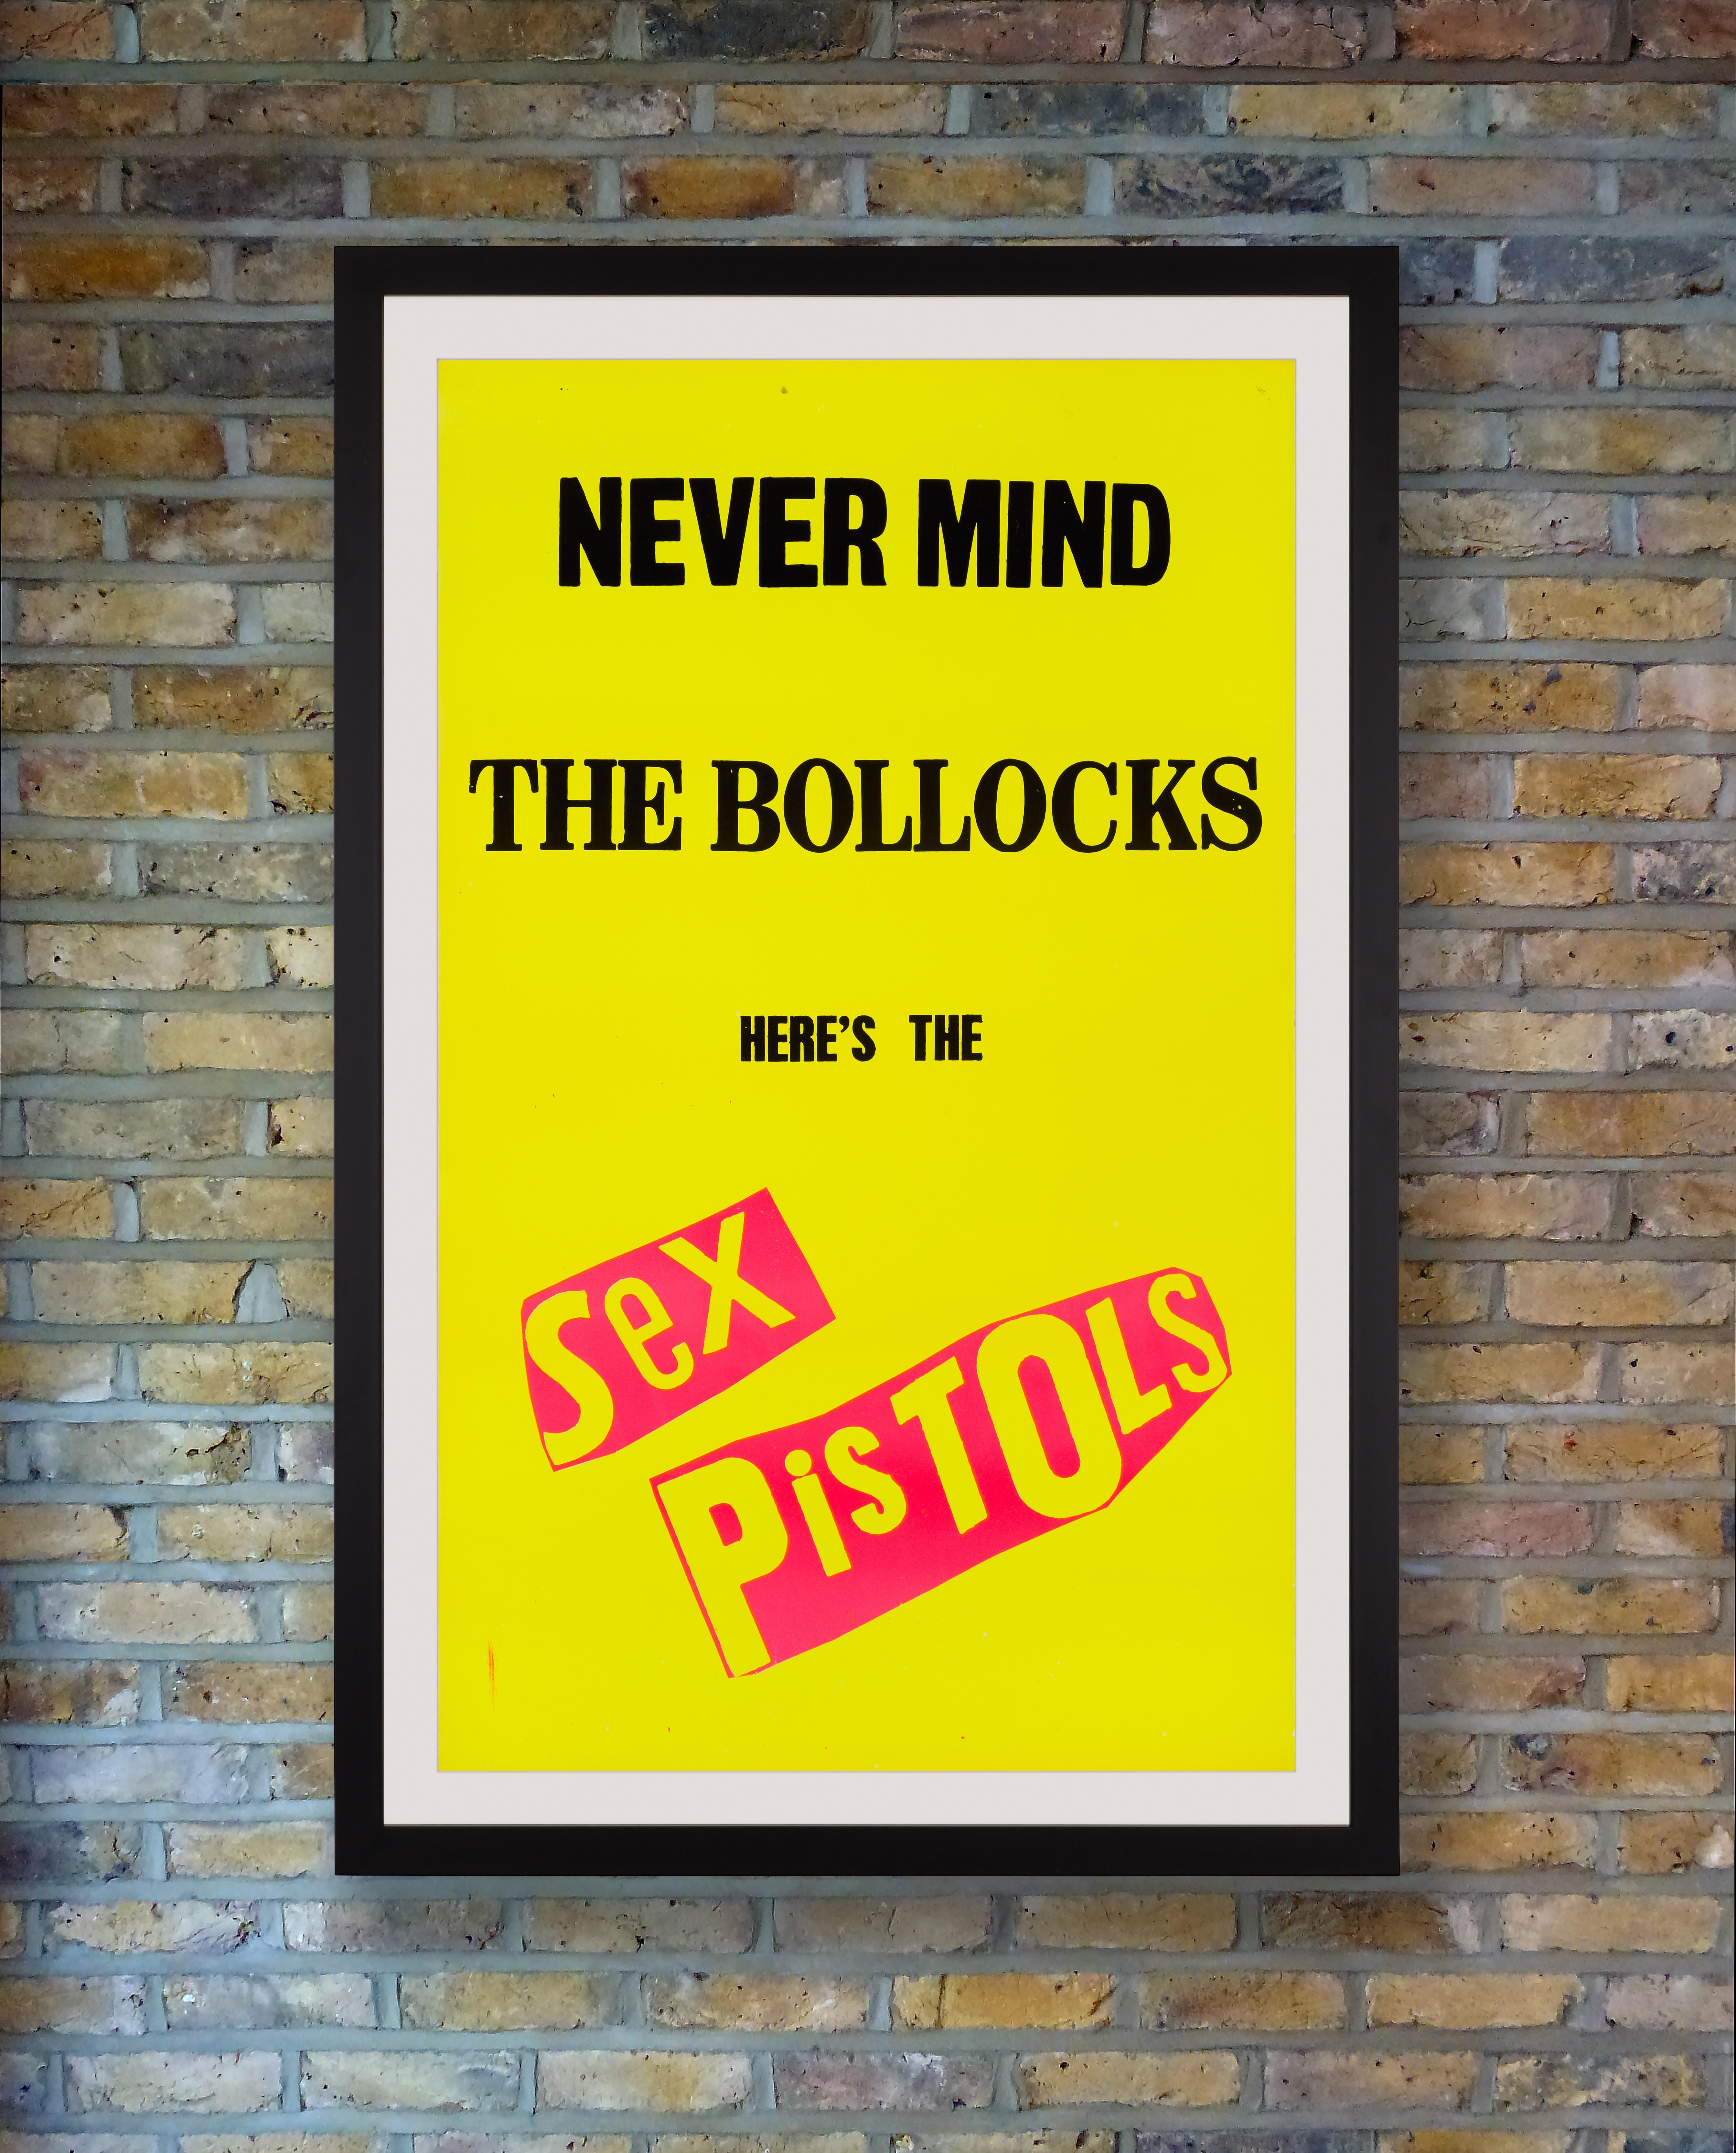 Sex Pistols 'Never Mind The Bollocks' UK Promo Poster by Jamie Reid, 1977 For Sale 1